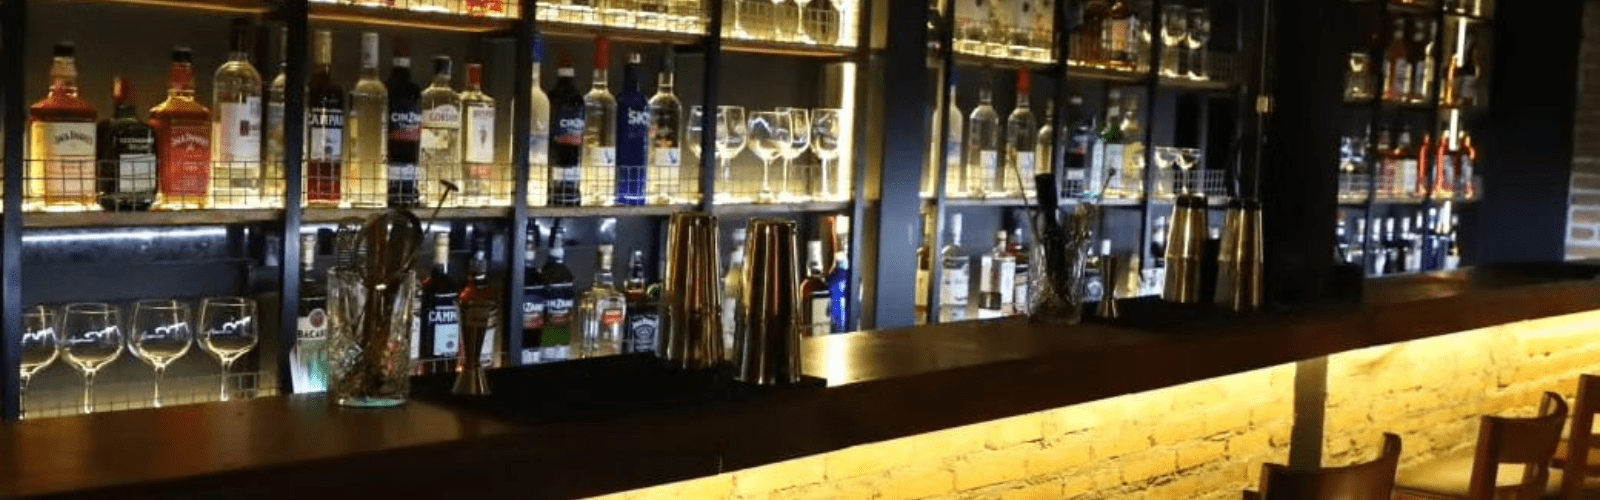 Decreto Bar & Drinkeria